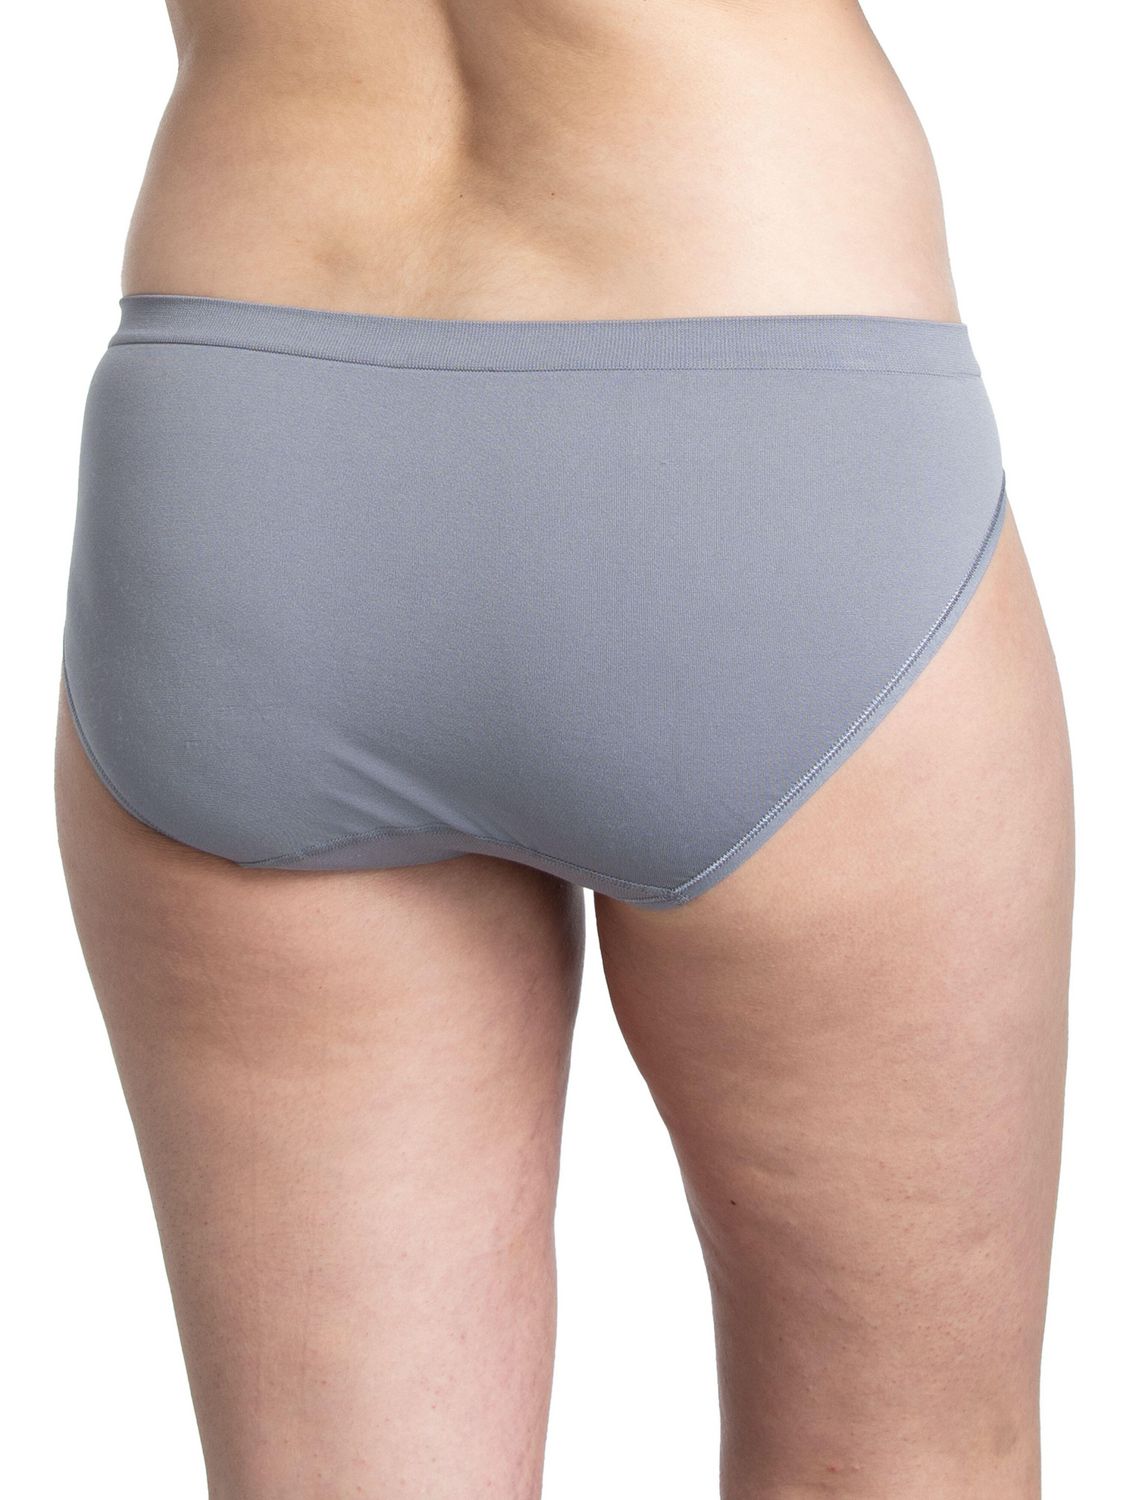 Fruit of the Loom Cotton Bikini Panties Slightly Imperfect Size 5